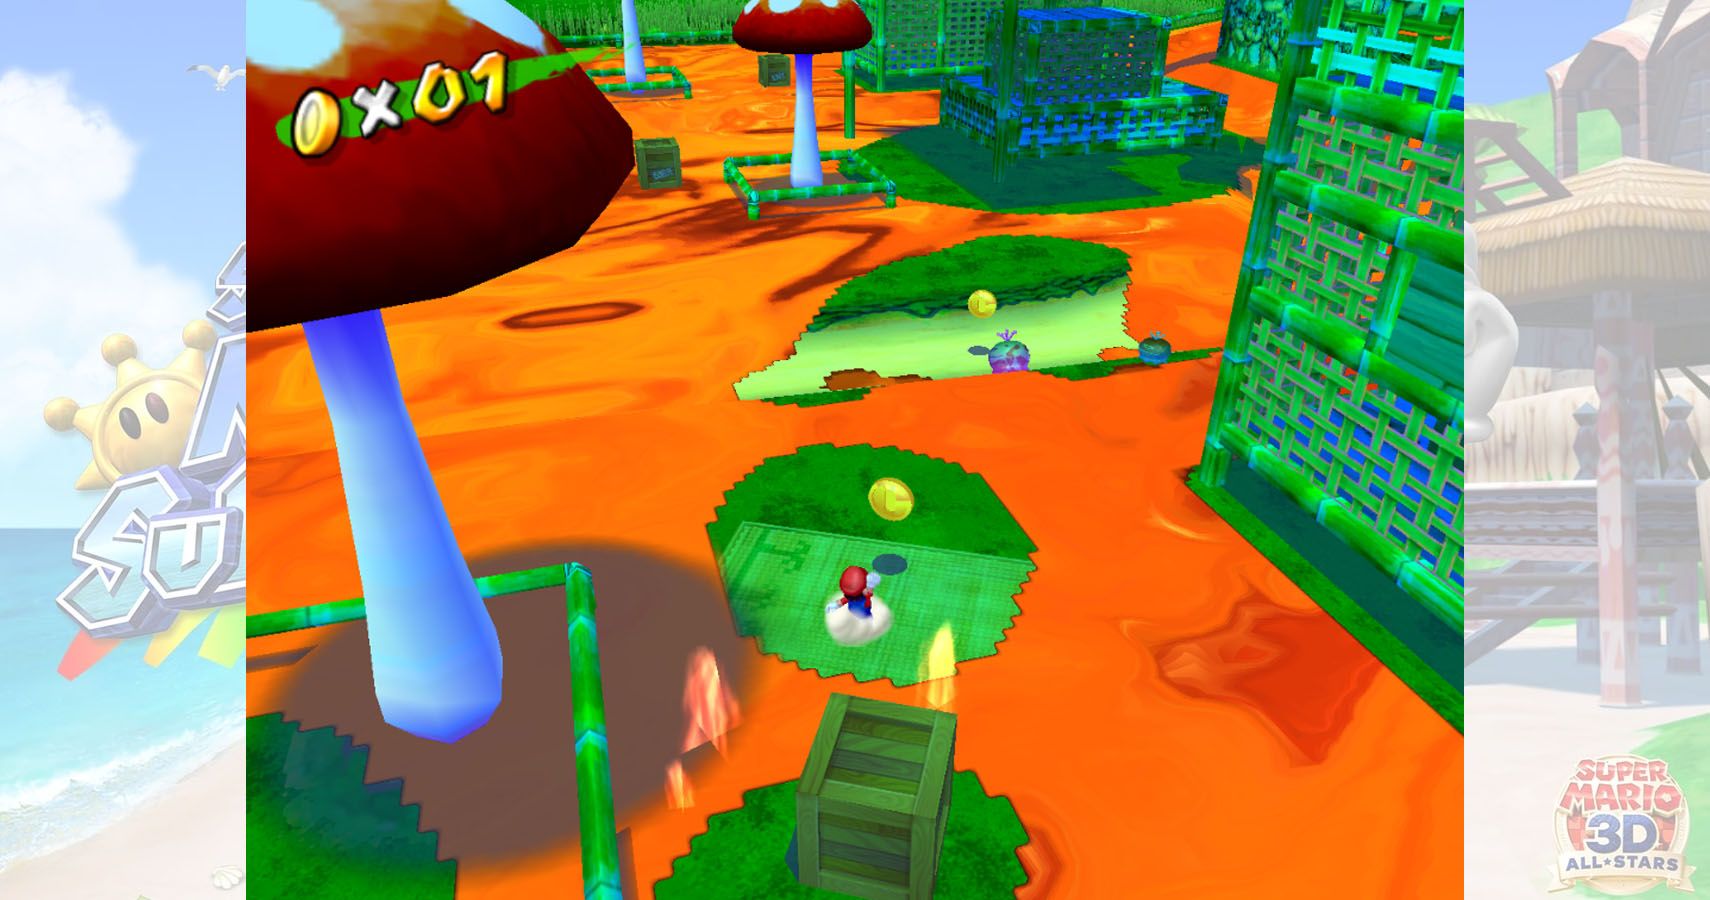 Mario under the village in gloopy inferno level of super mario sunshine.